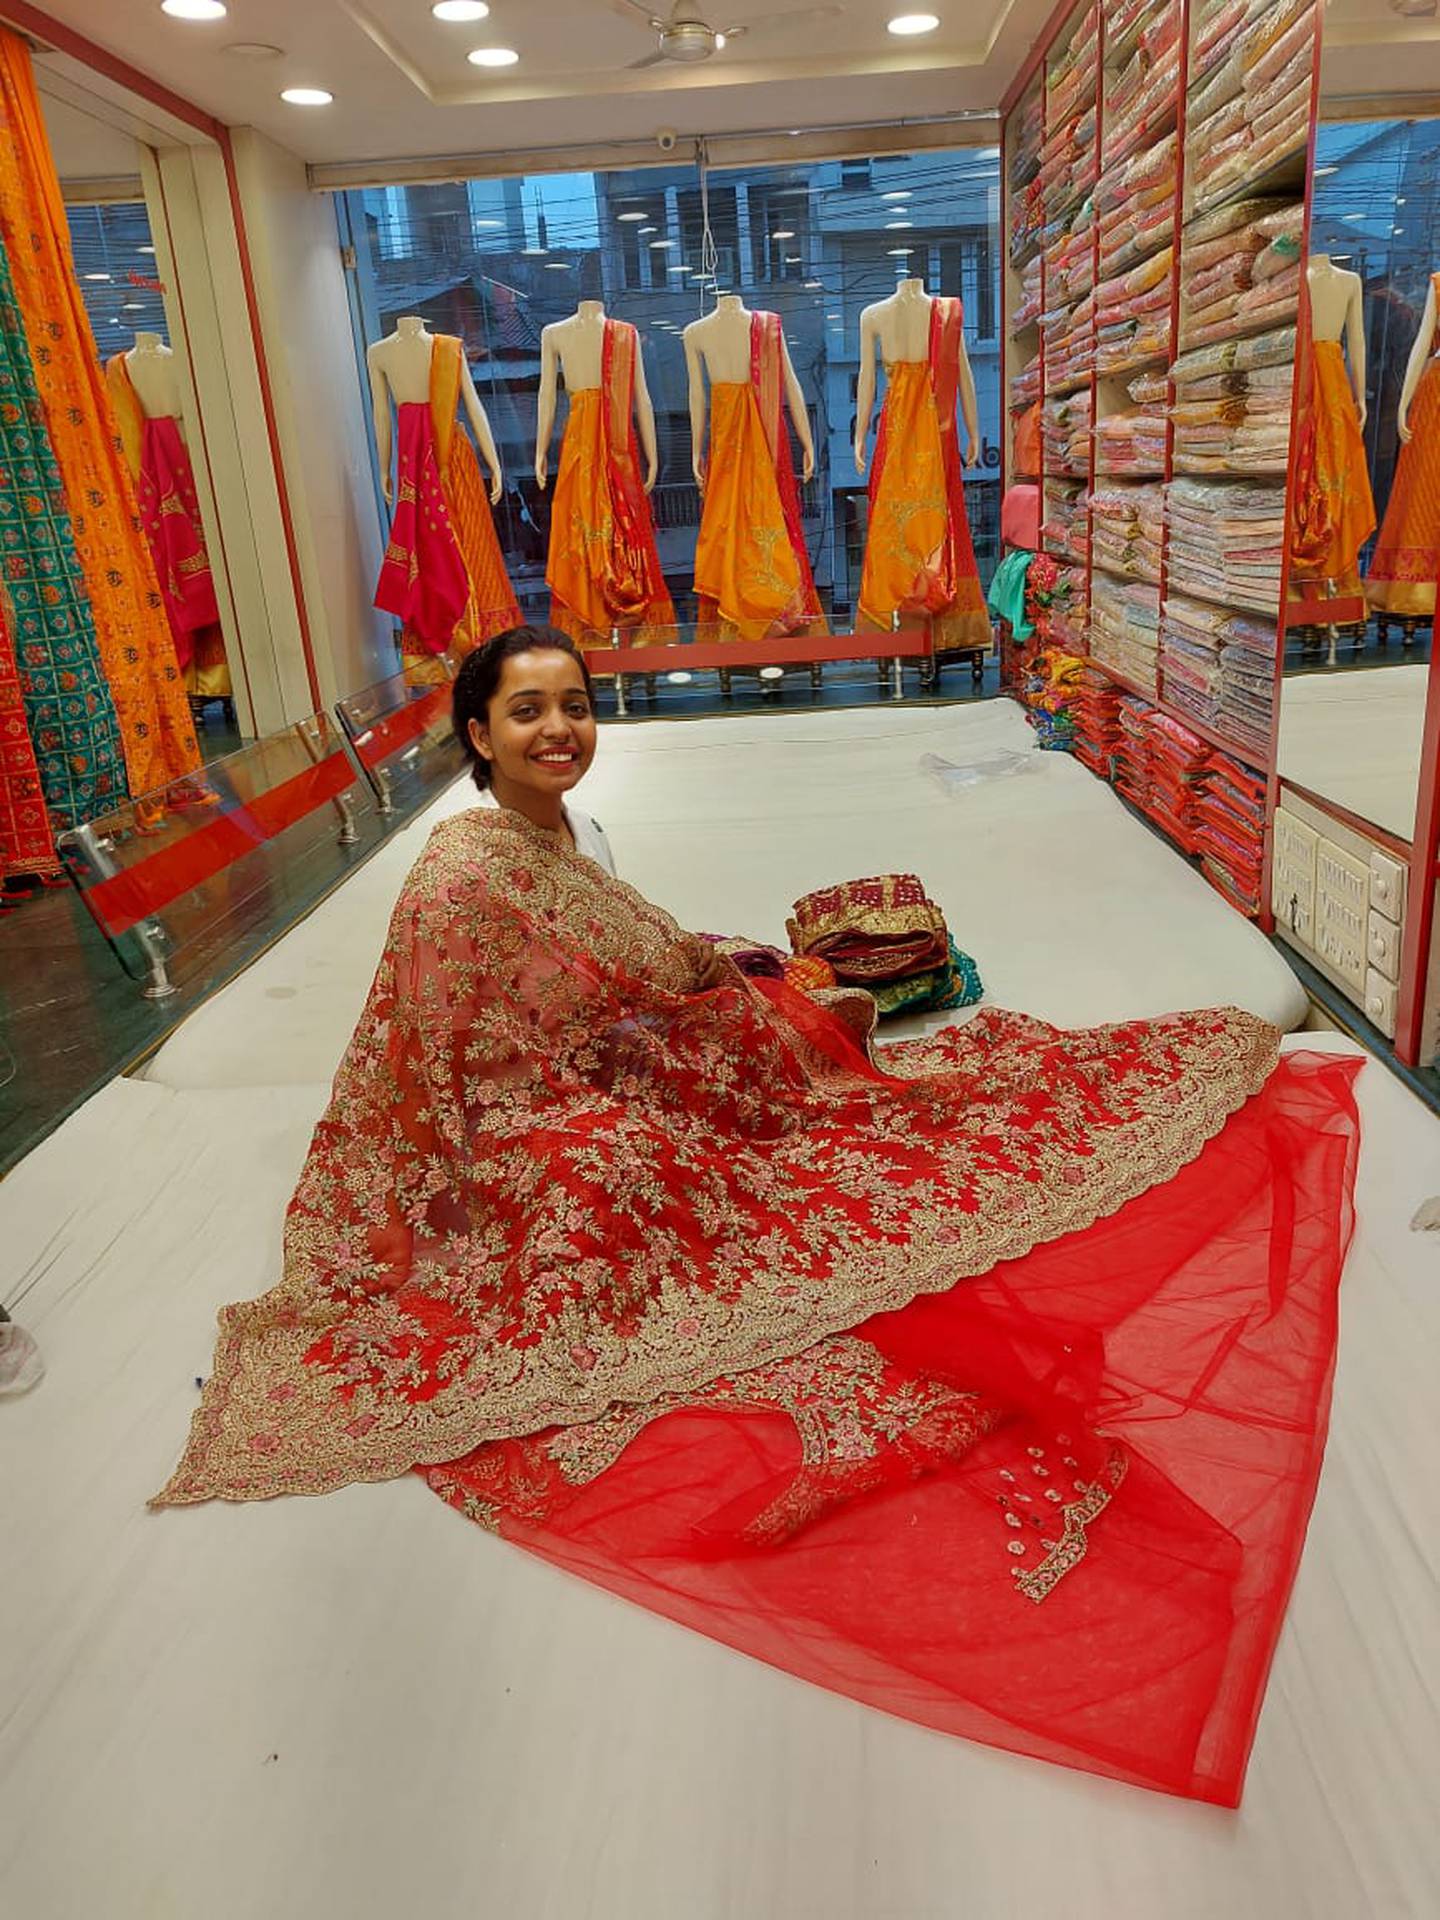 Kshama Bindu shopping for her wedding day. Photo: Kshama Bindu